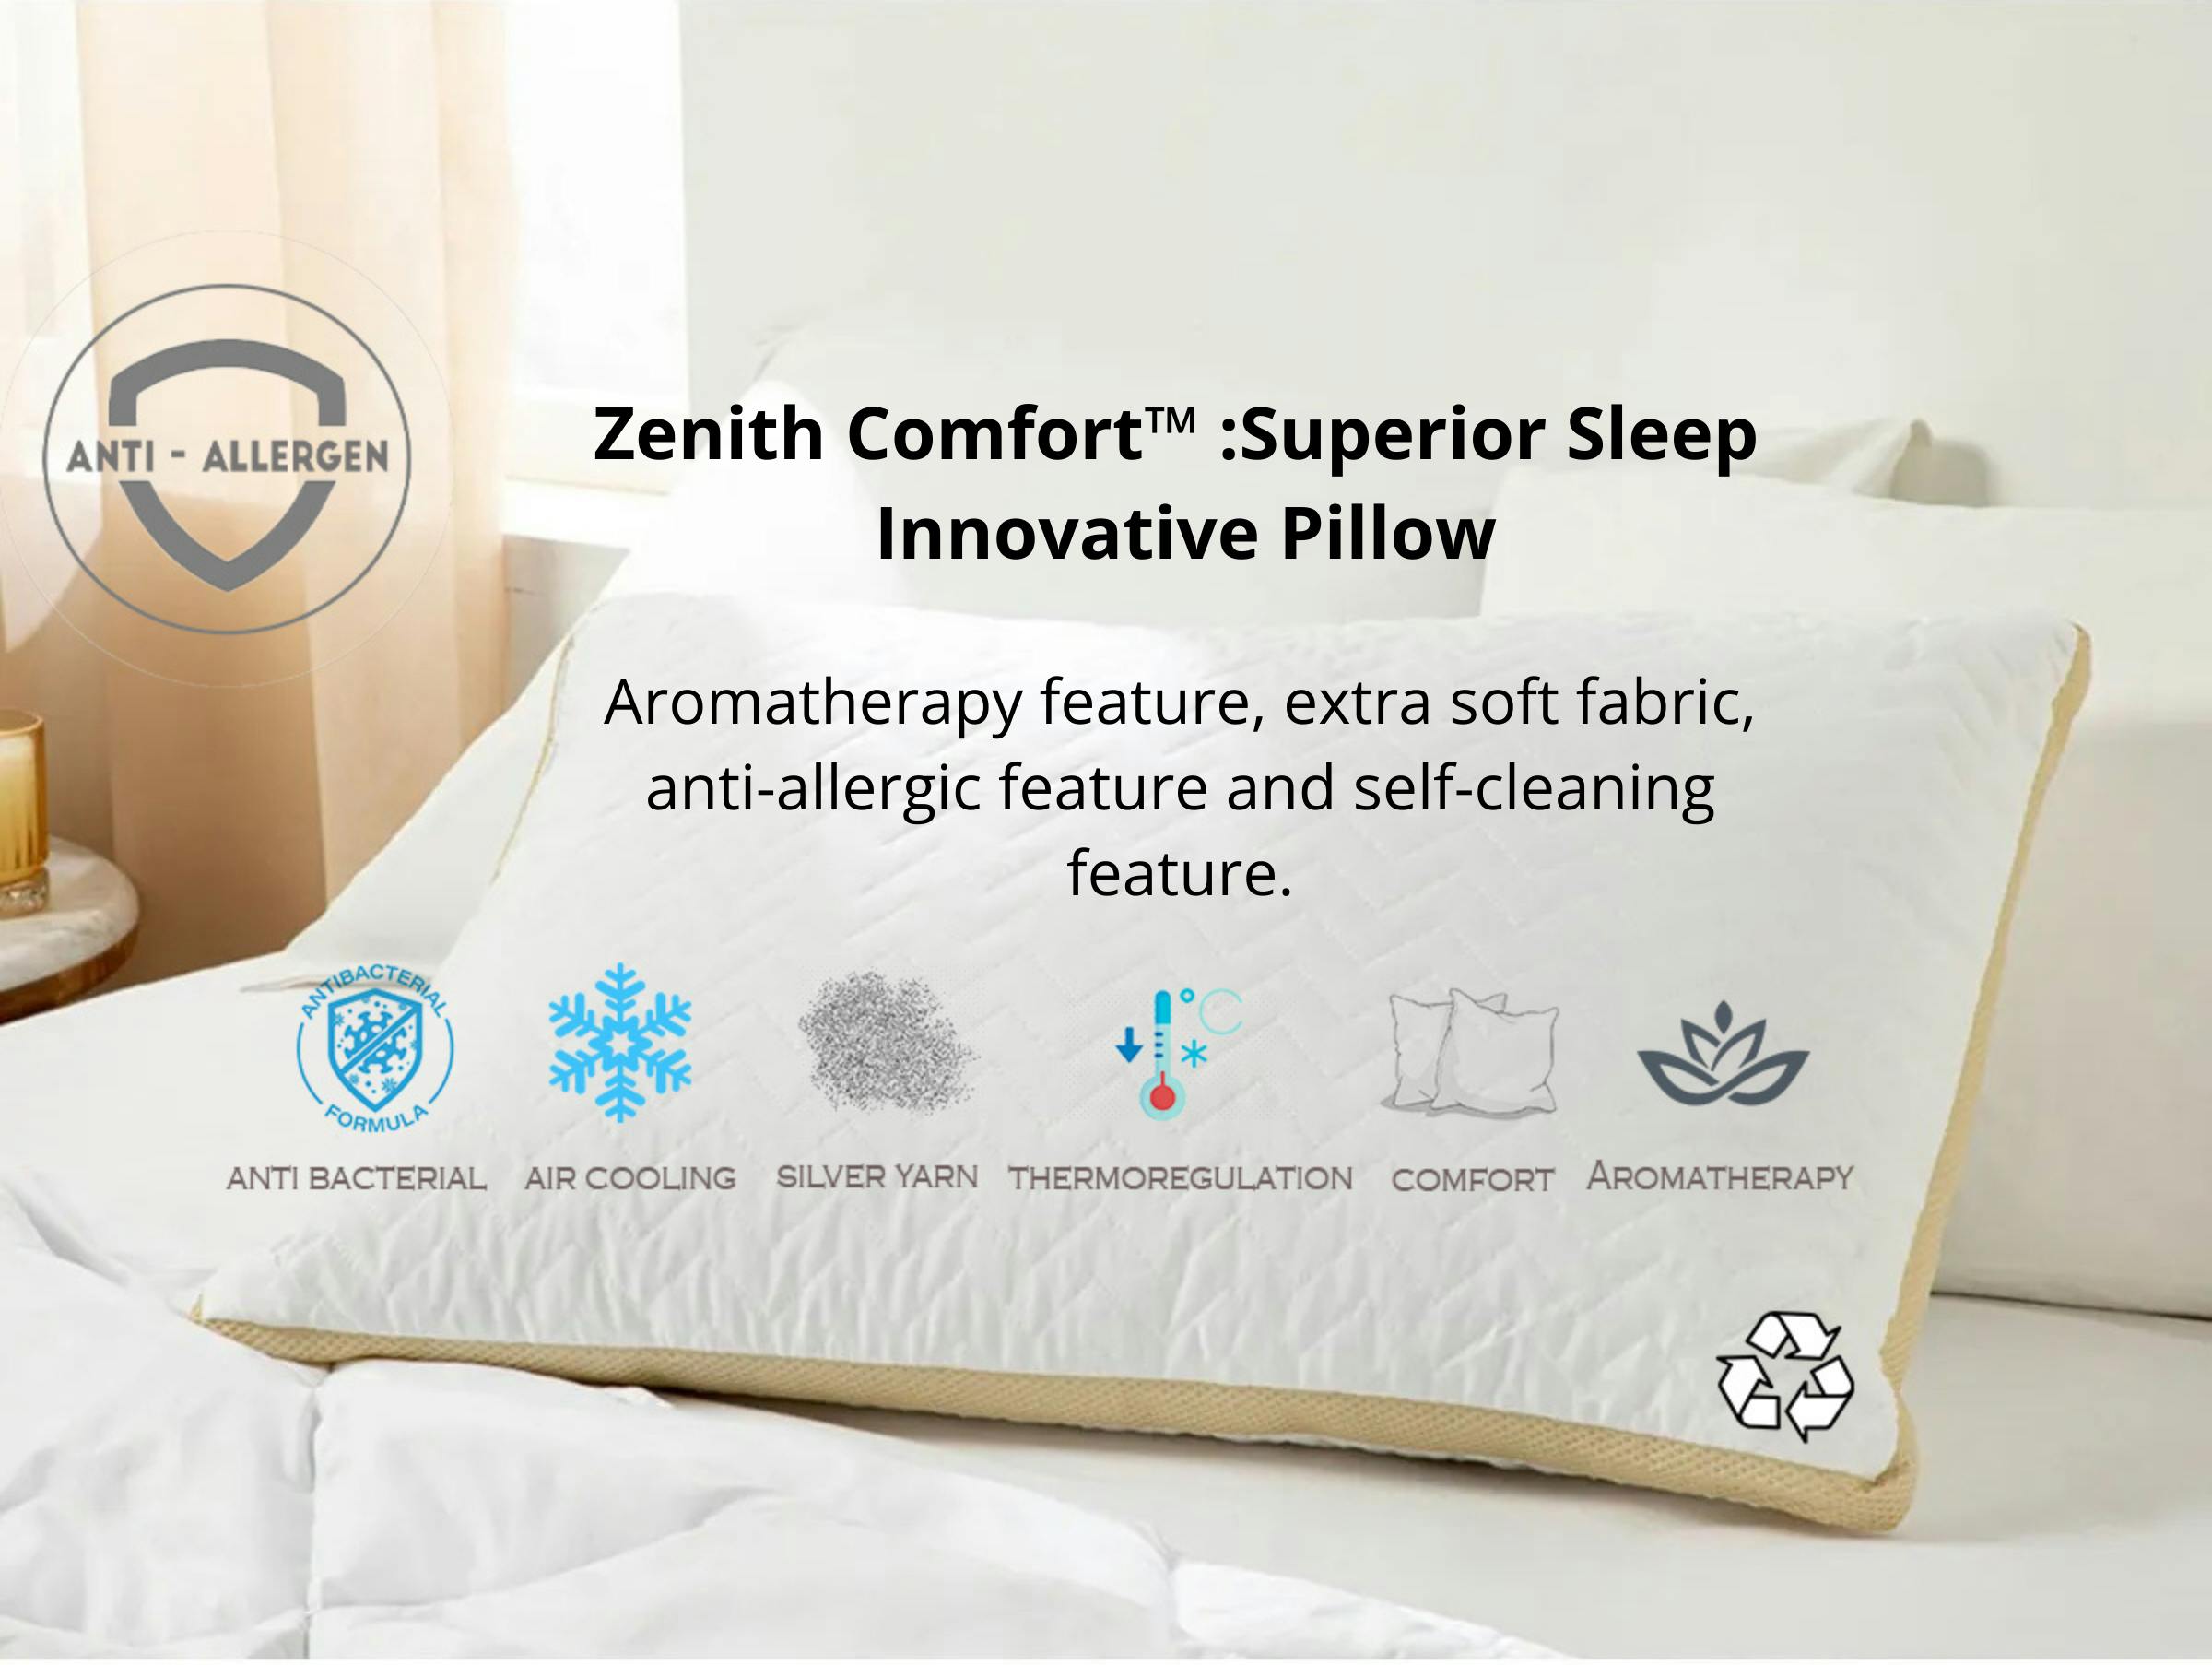 Zenith Comfort™ :Superior Sleep Innovative Pillow